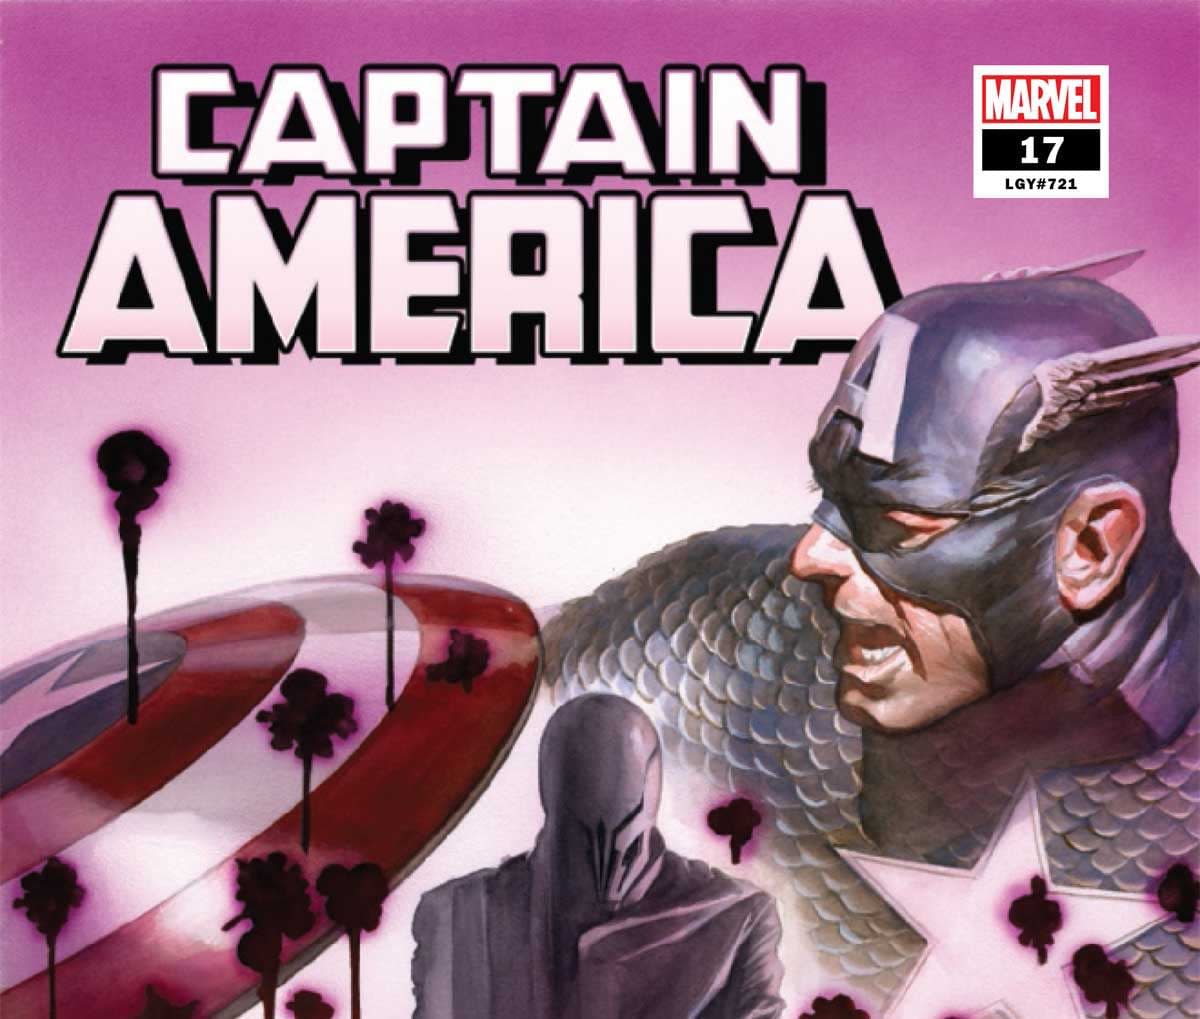 REVIEW: Captain America #17